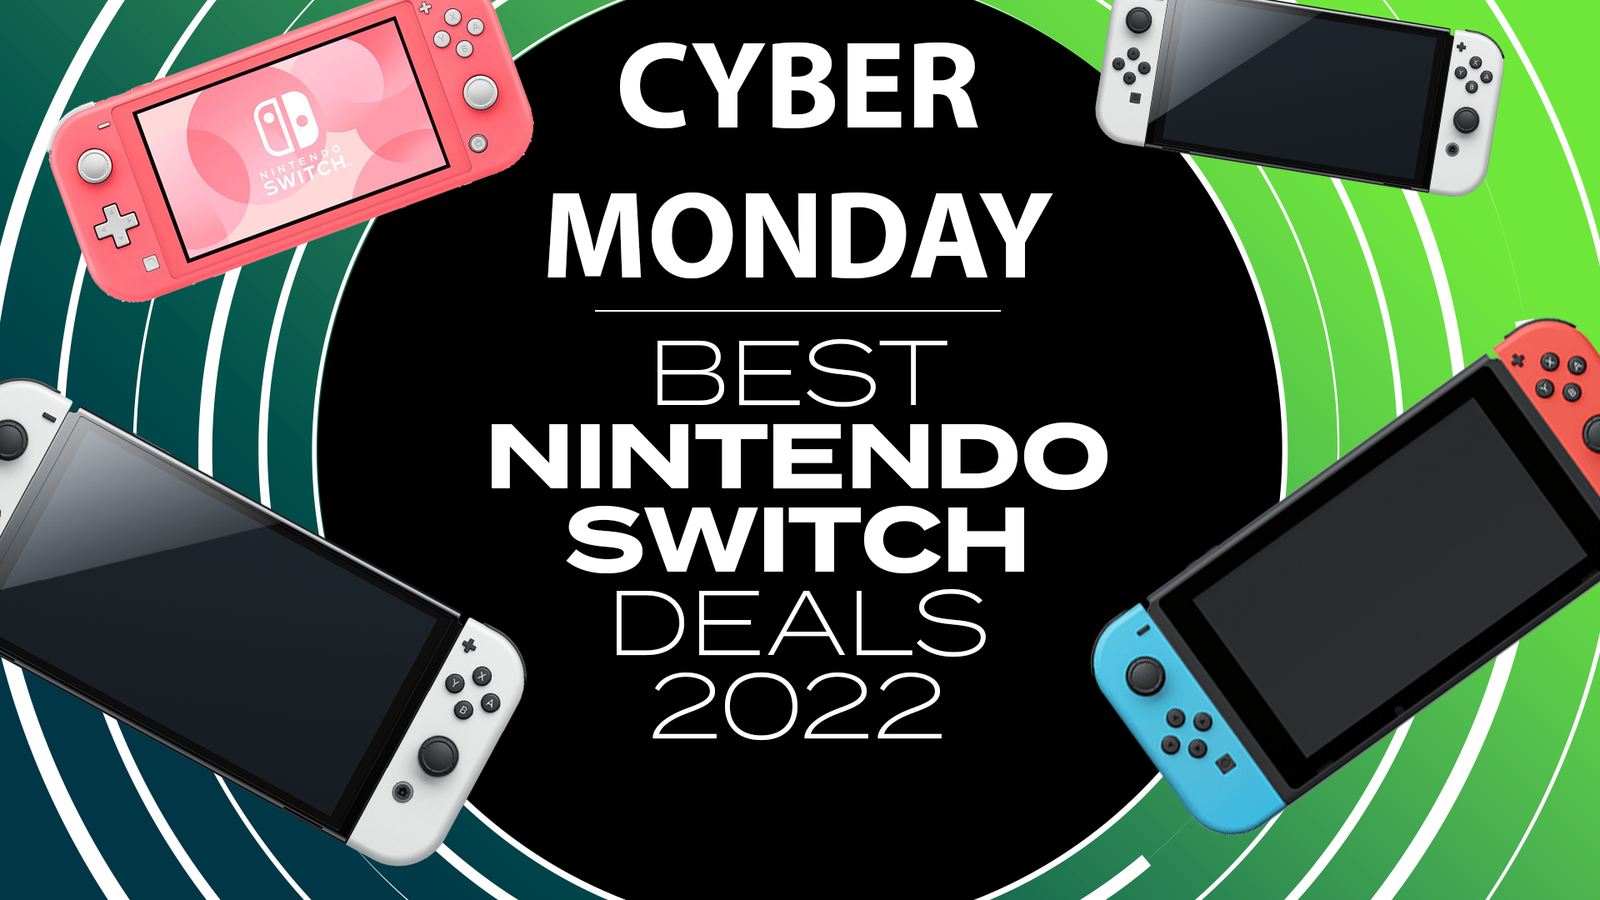 Nintendo Switch Black Friday SALE - Grab some amazing bargains on eShop, Gaming, Entertainment